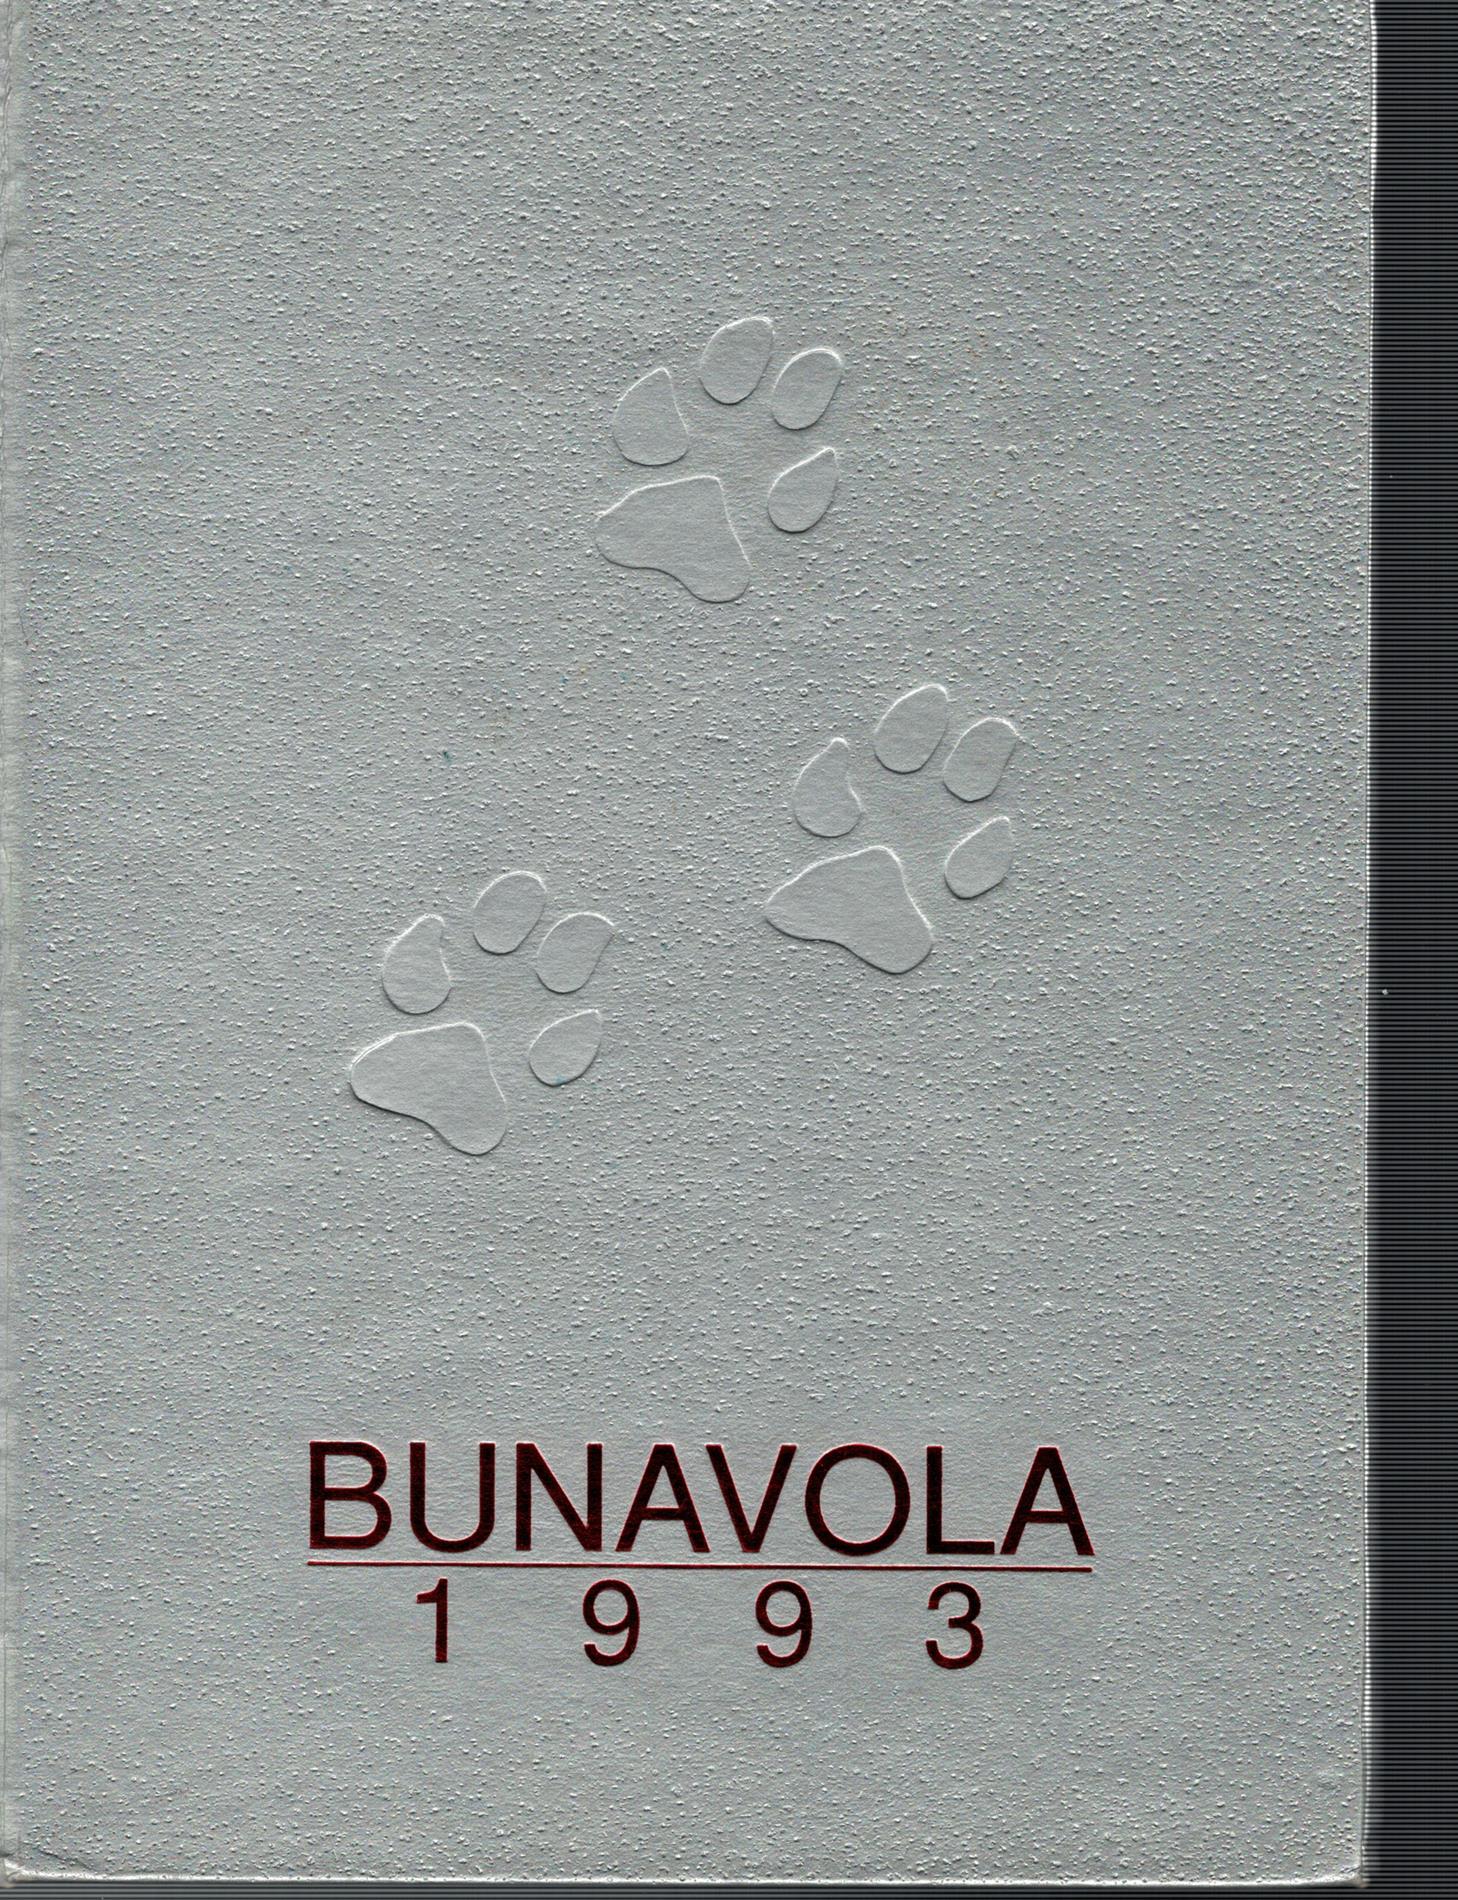 1993 Bunavola